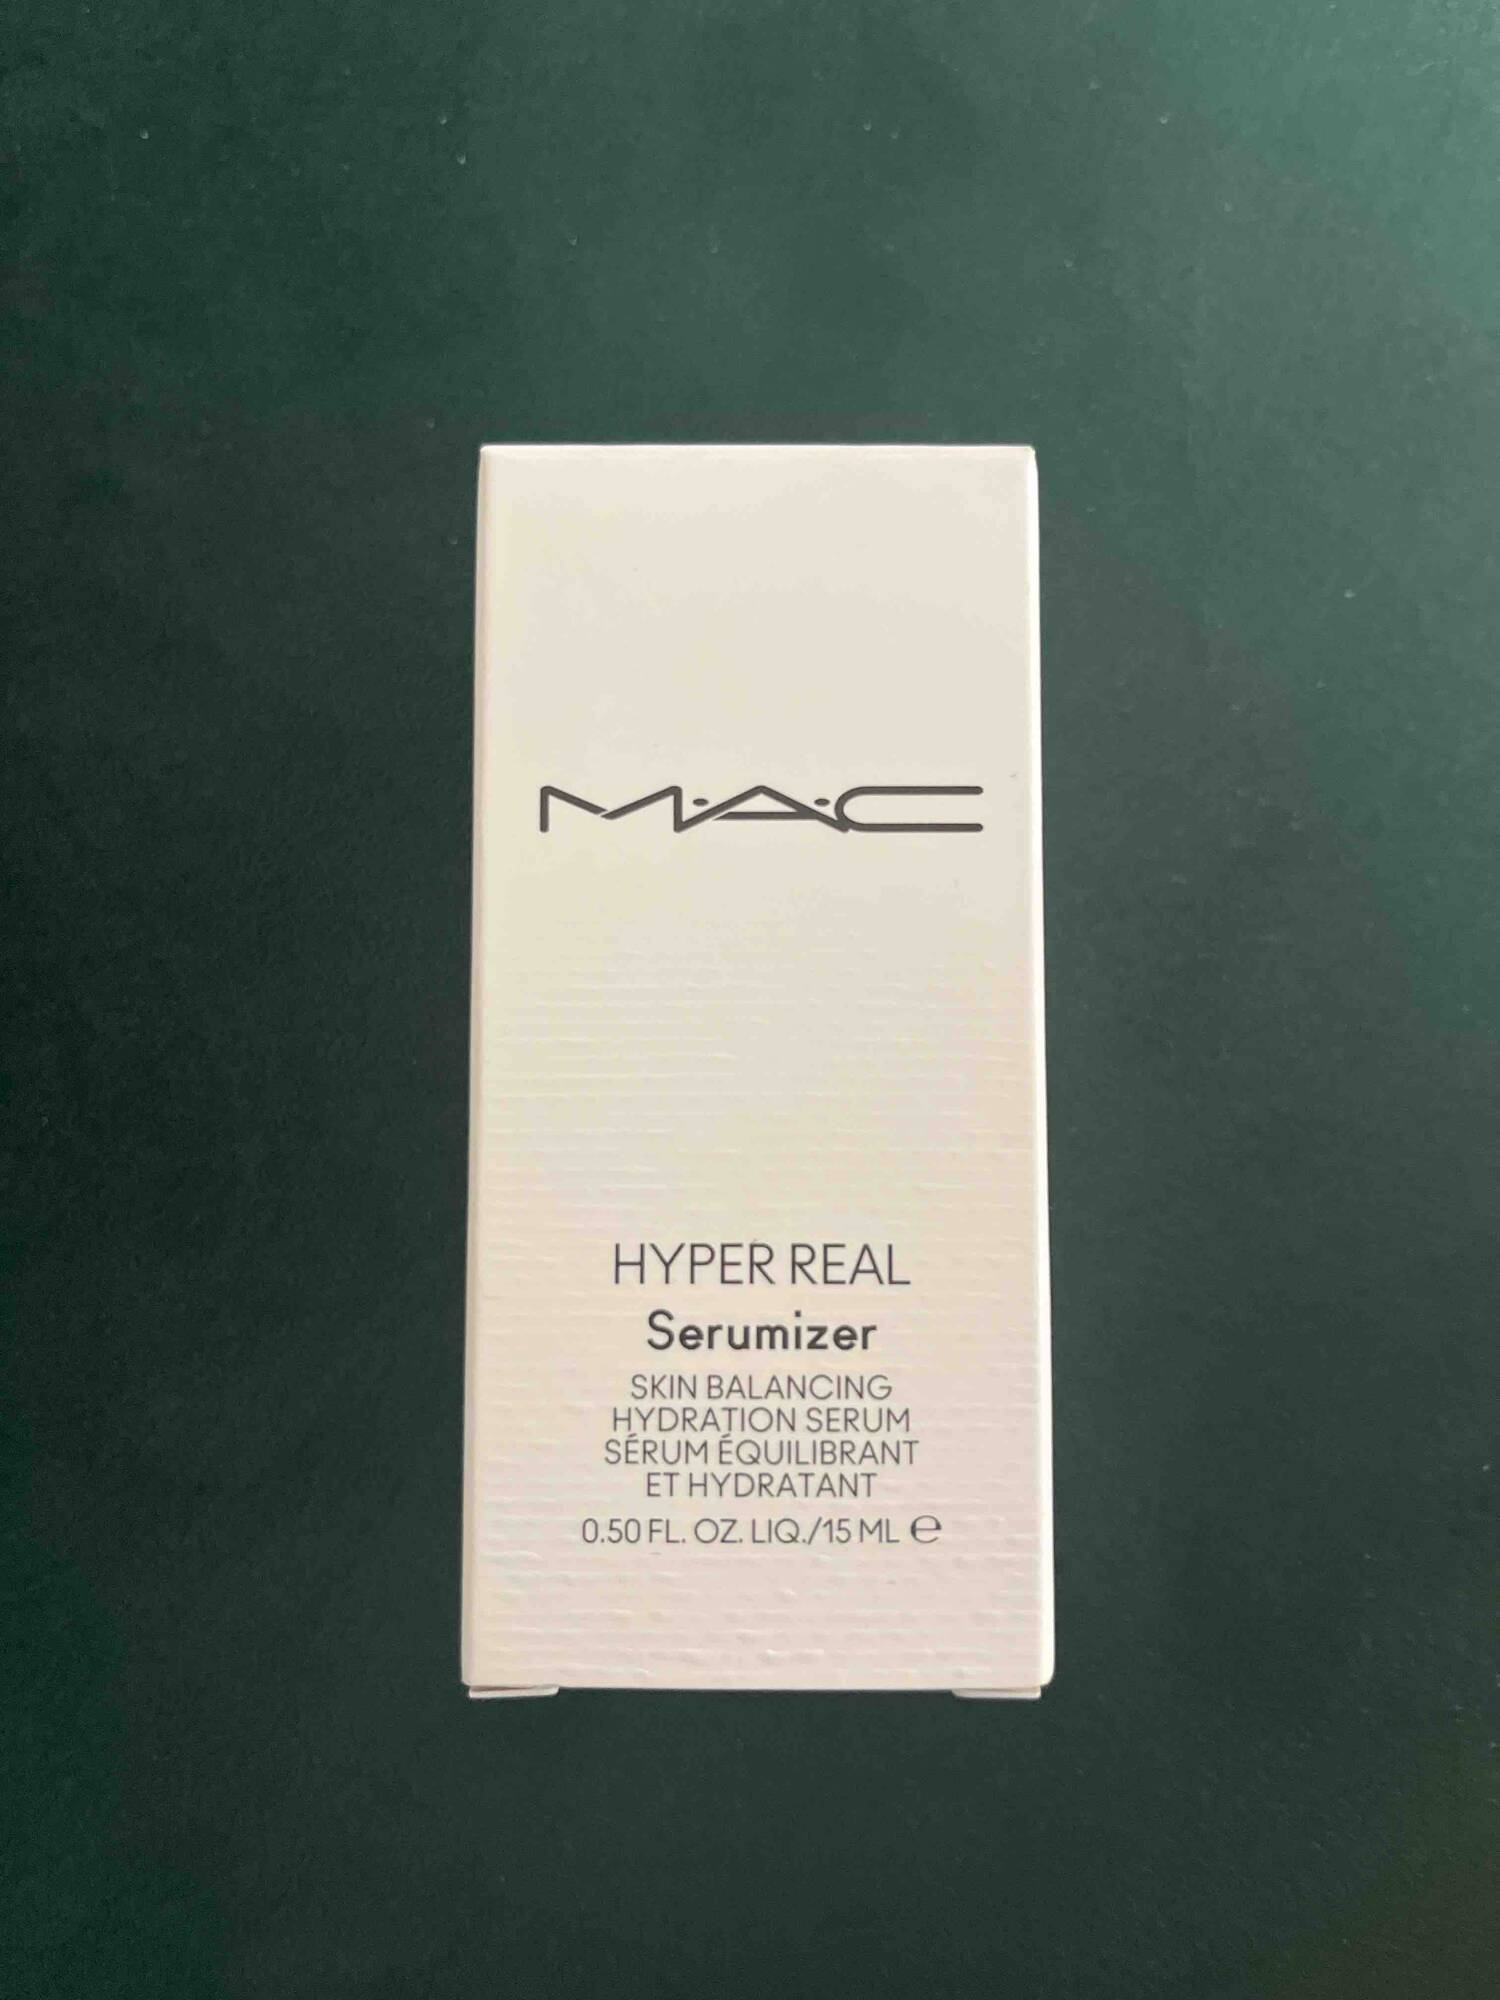 MAC - Hyper real - Sérum équilibrant et hydratant